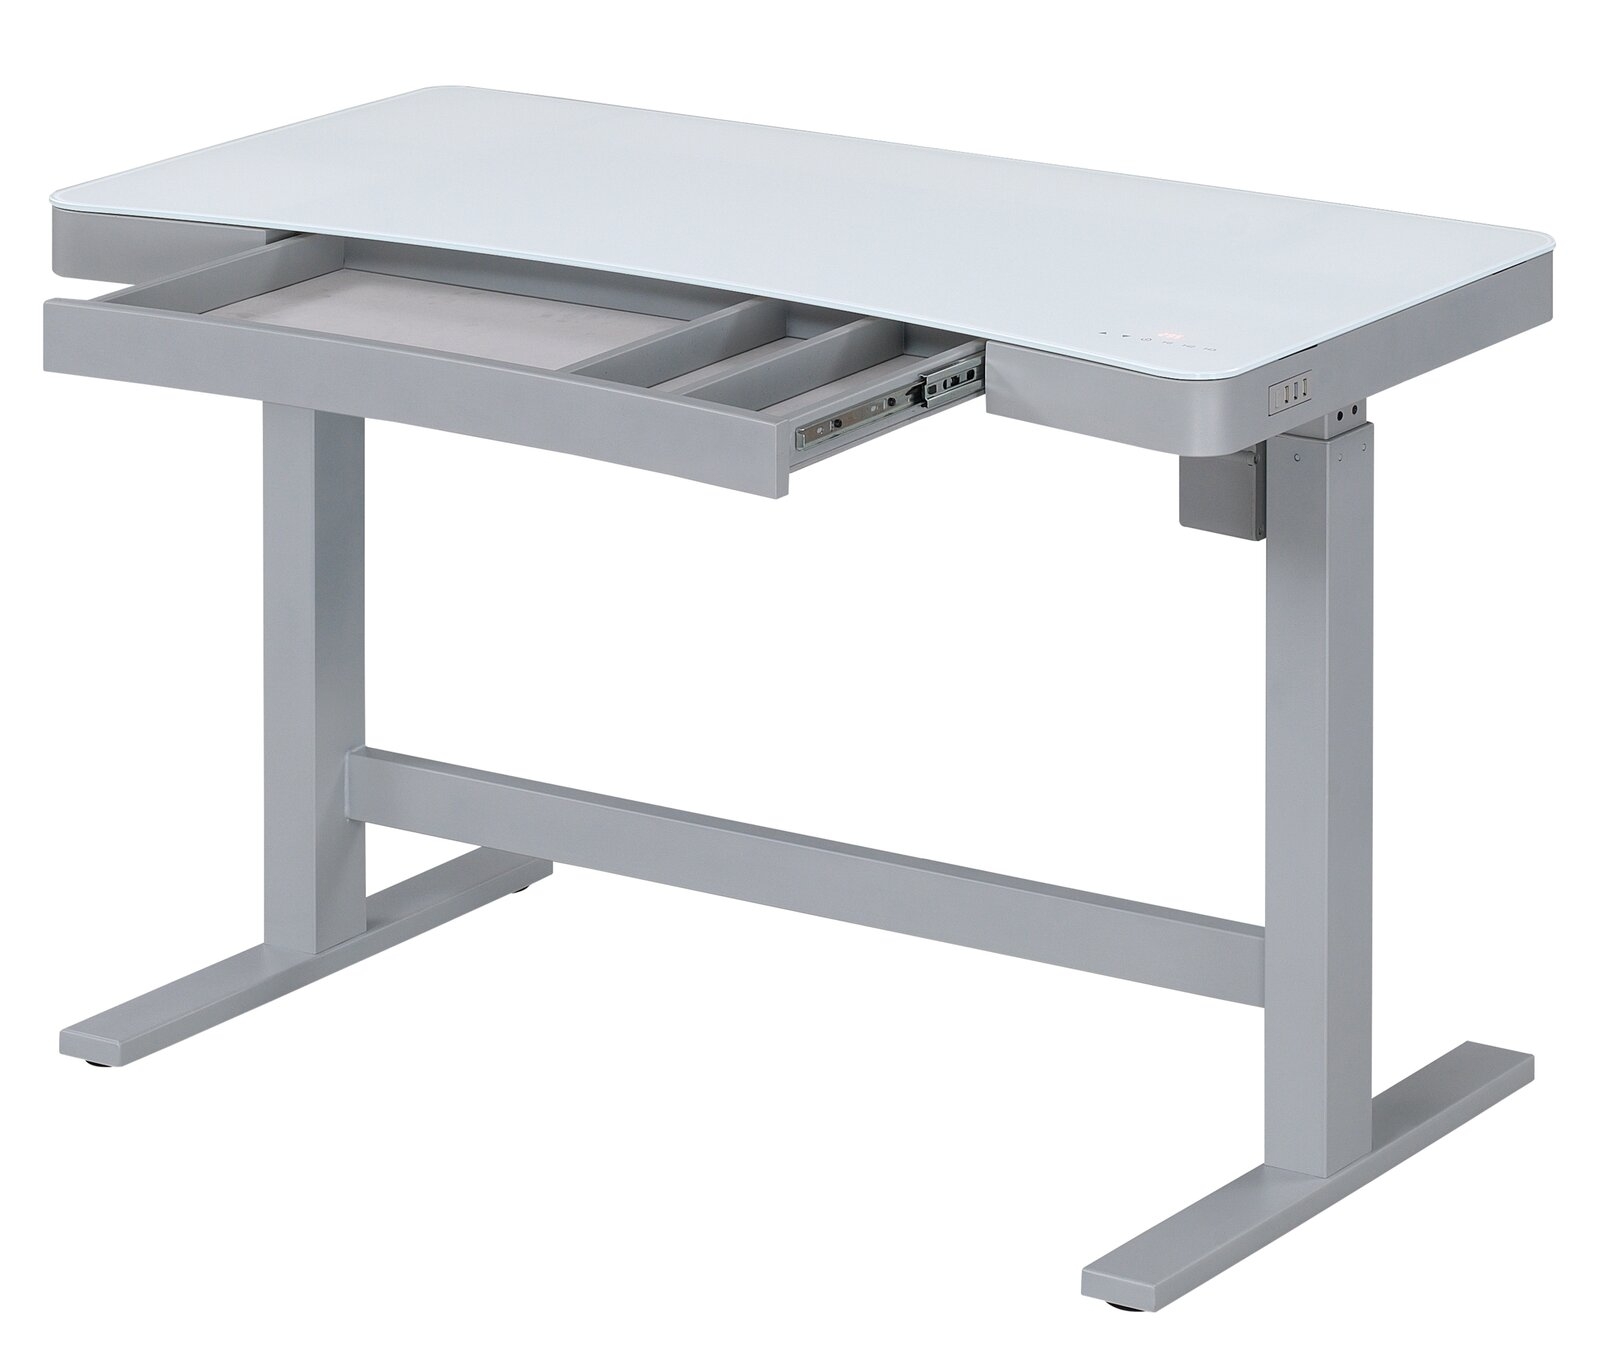 Babin Height Adjustable Standing Desk - Image 2